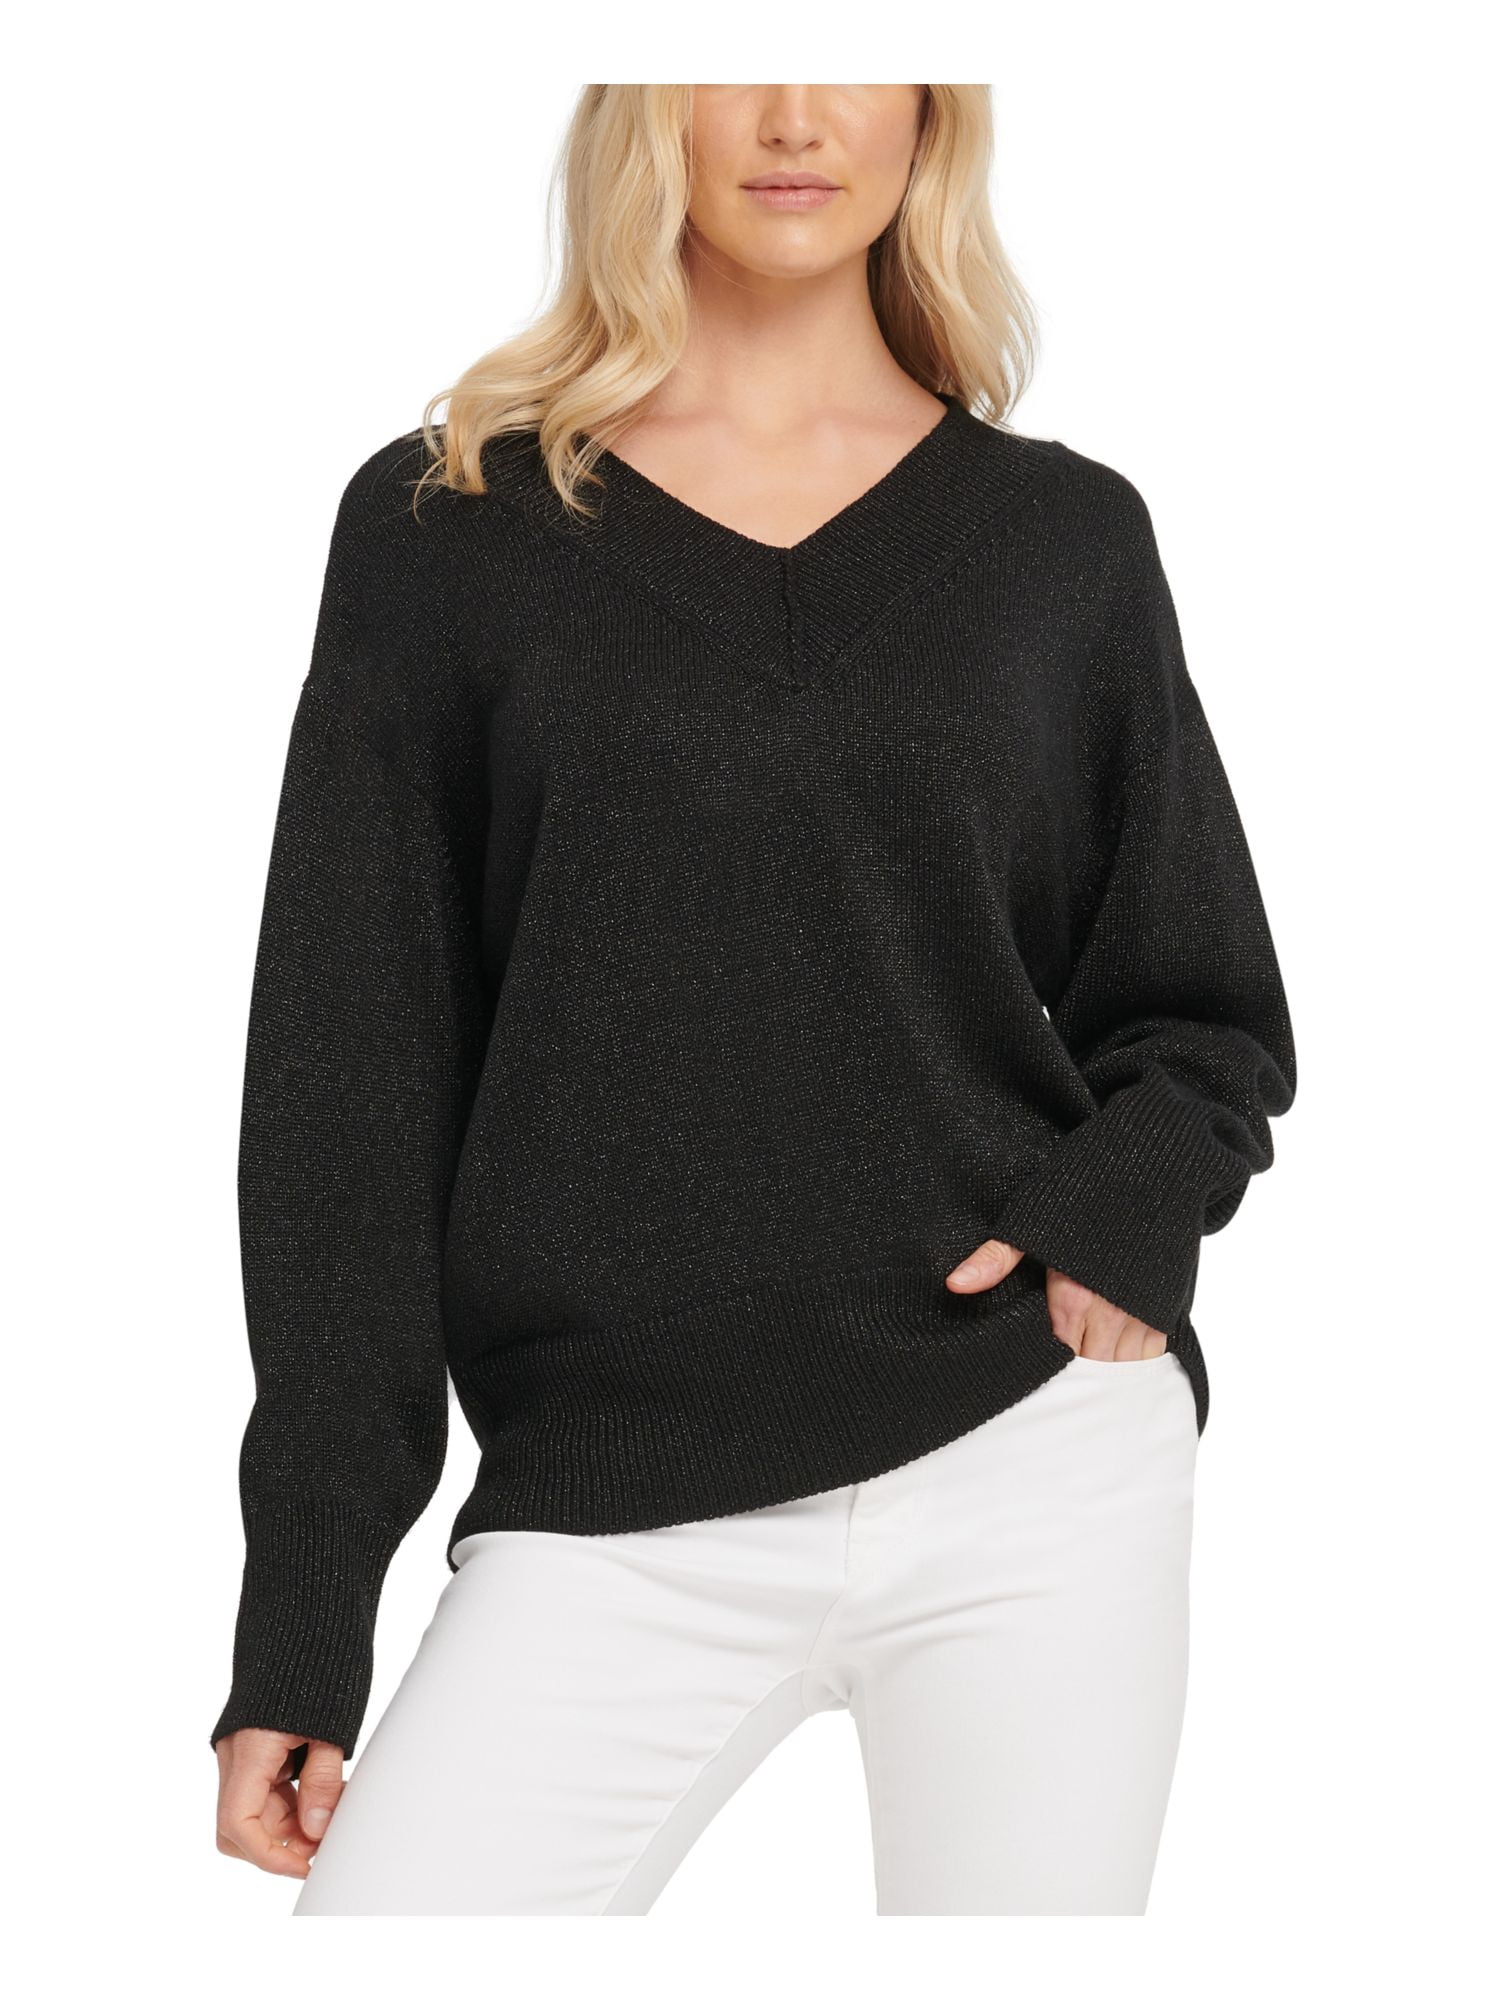 Sweater Neck Long Sleeve Top Womens Black Deep V